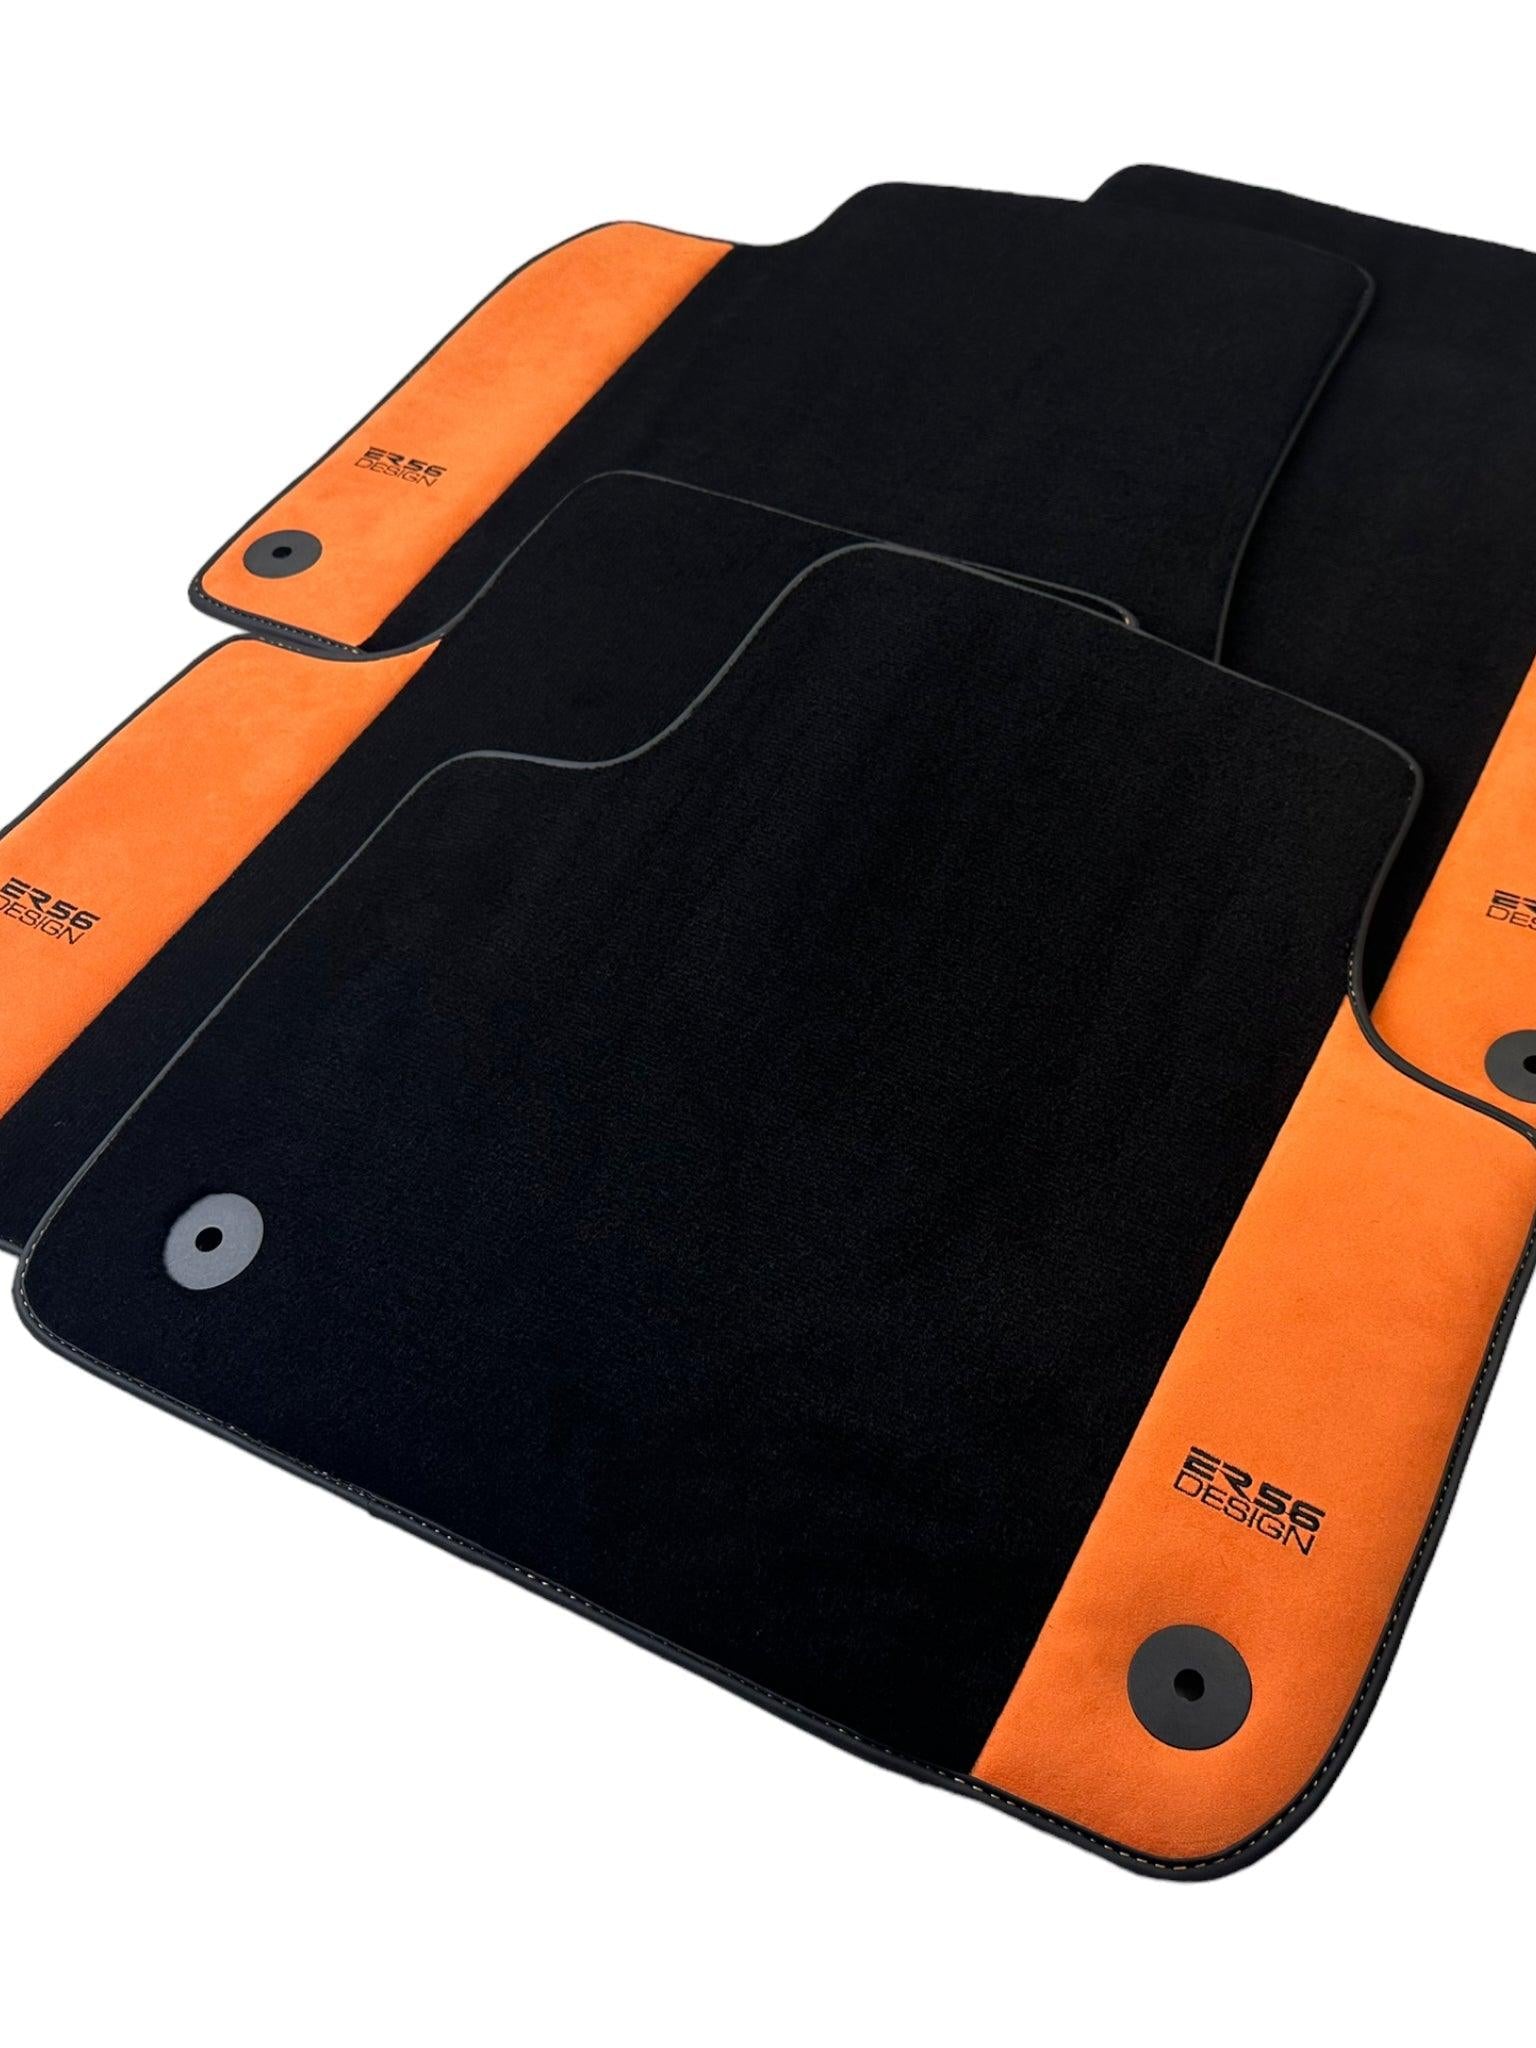 Black Floor Mats for Audi Q8 (2018-2023) Orange Alcantara | ER56 Design